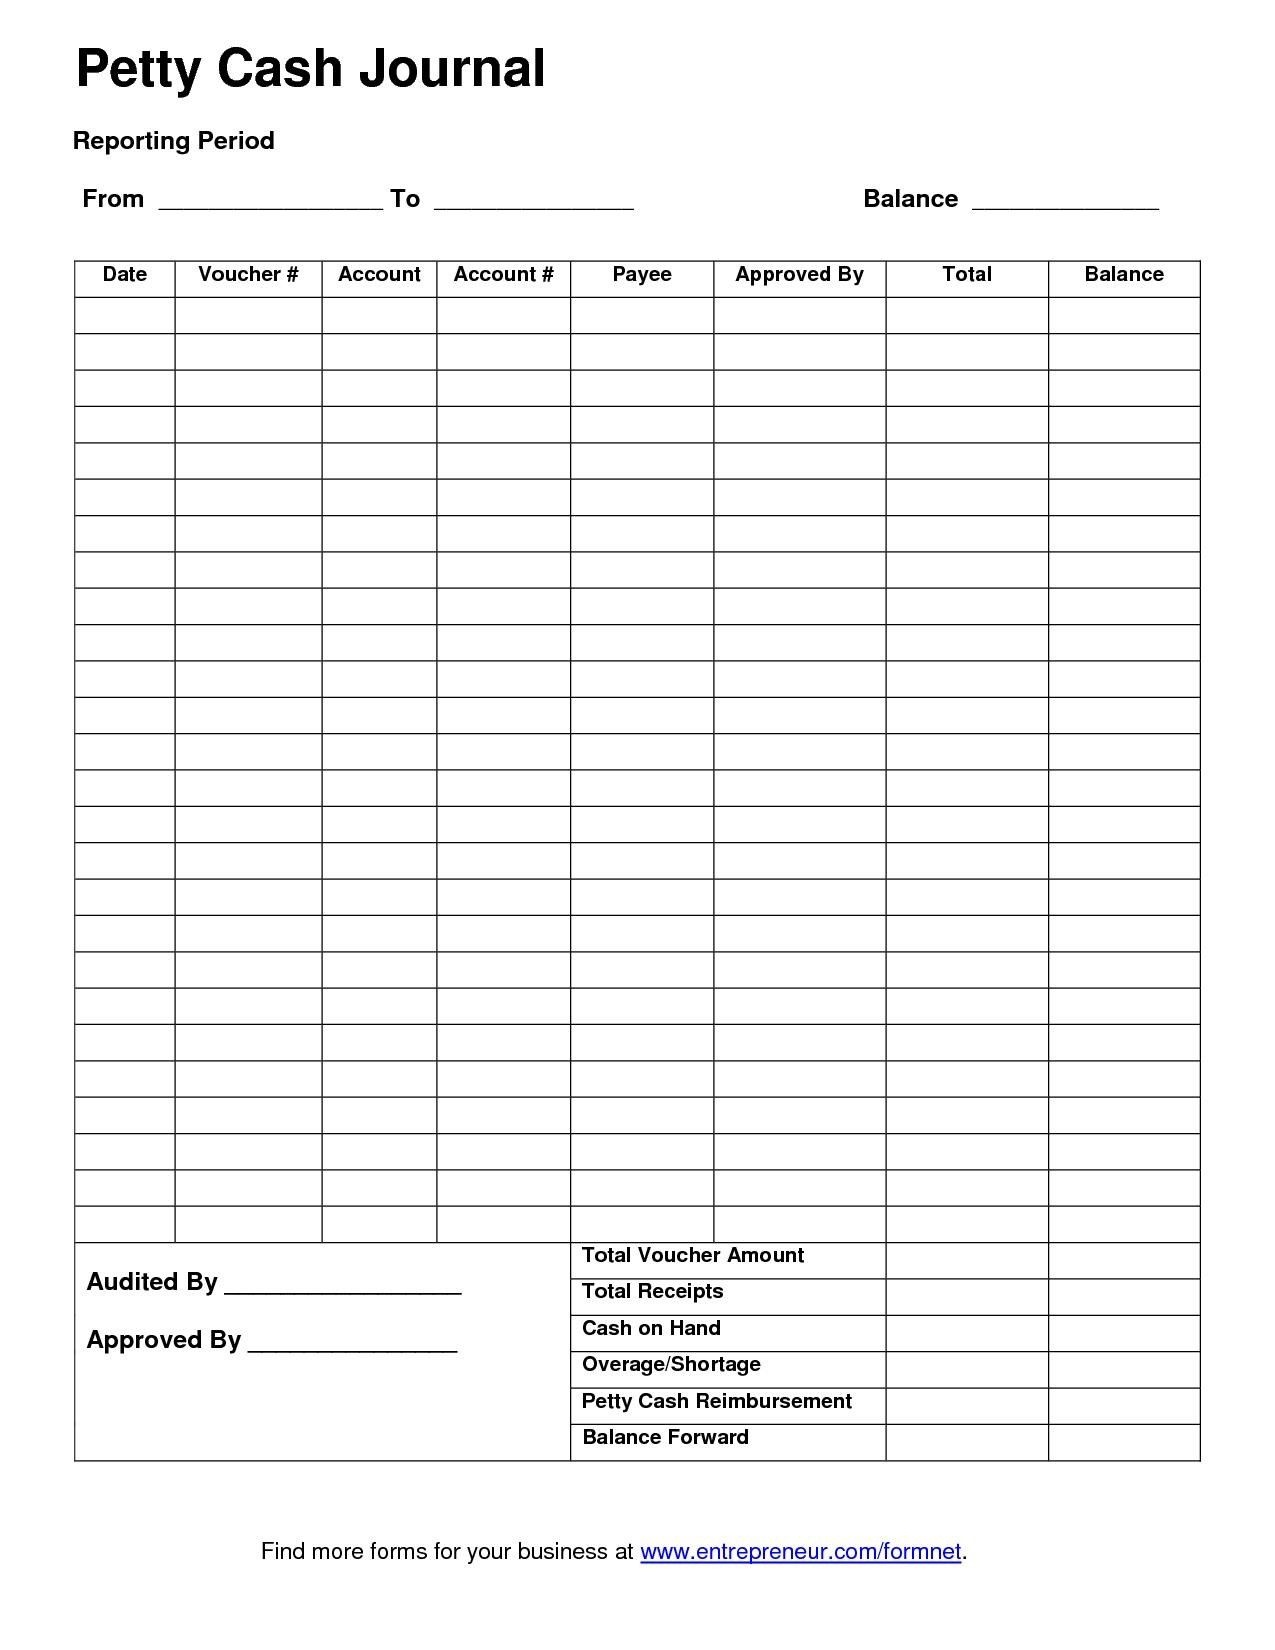 Template For Petty Cash Petty Cash Report Template Excel Z0Fg9Ter - Free Printable Petty Cash Voucher